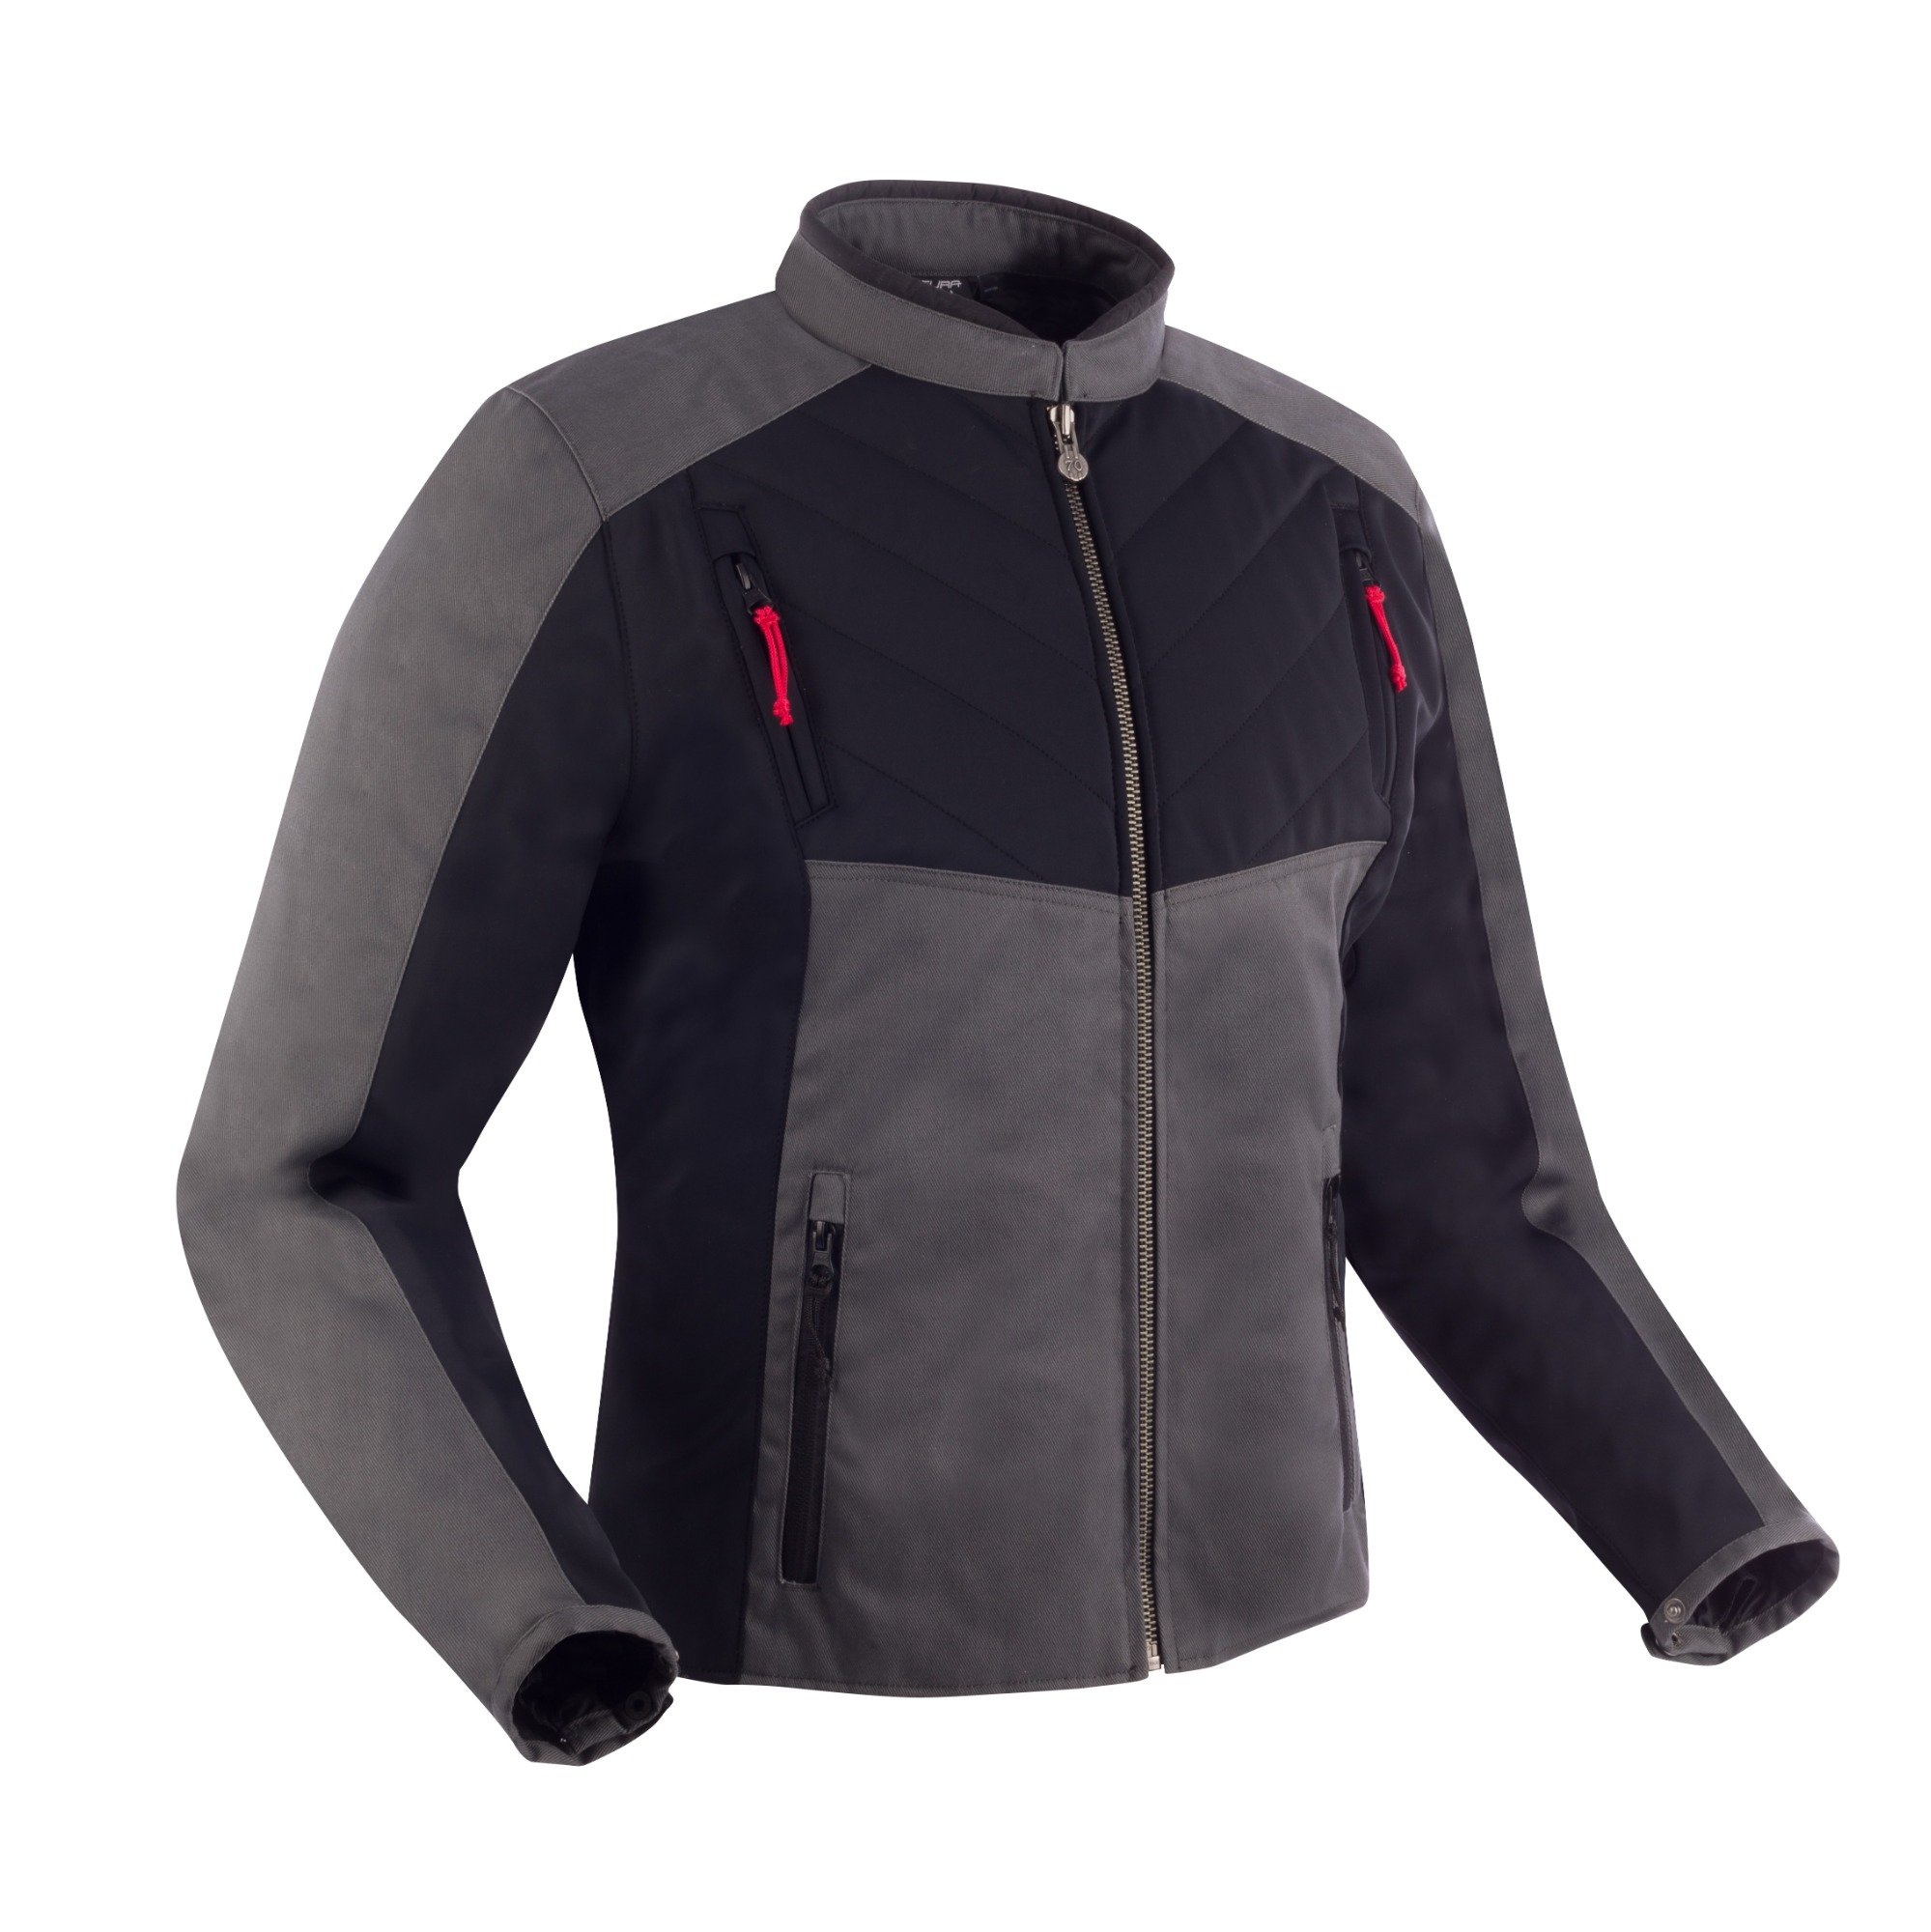 Image of Segura Volt Jacket Gray Black Size 2XL ID 3660815168875